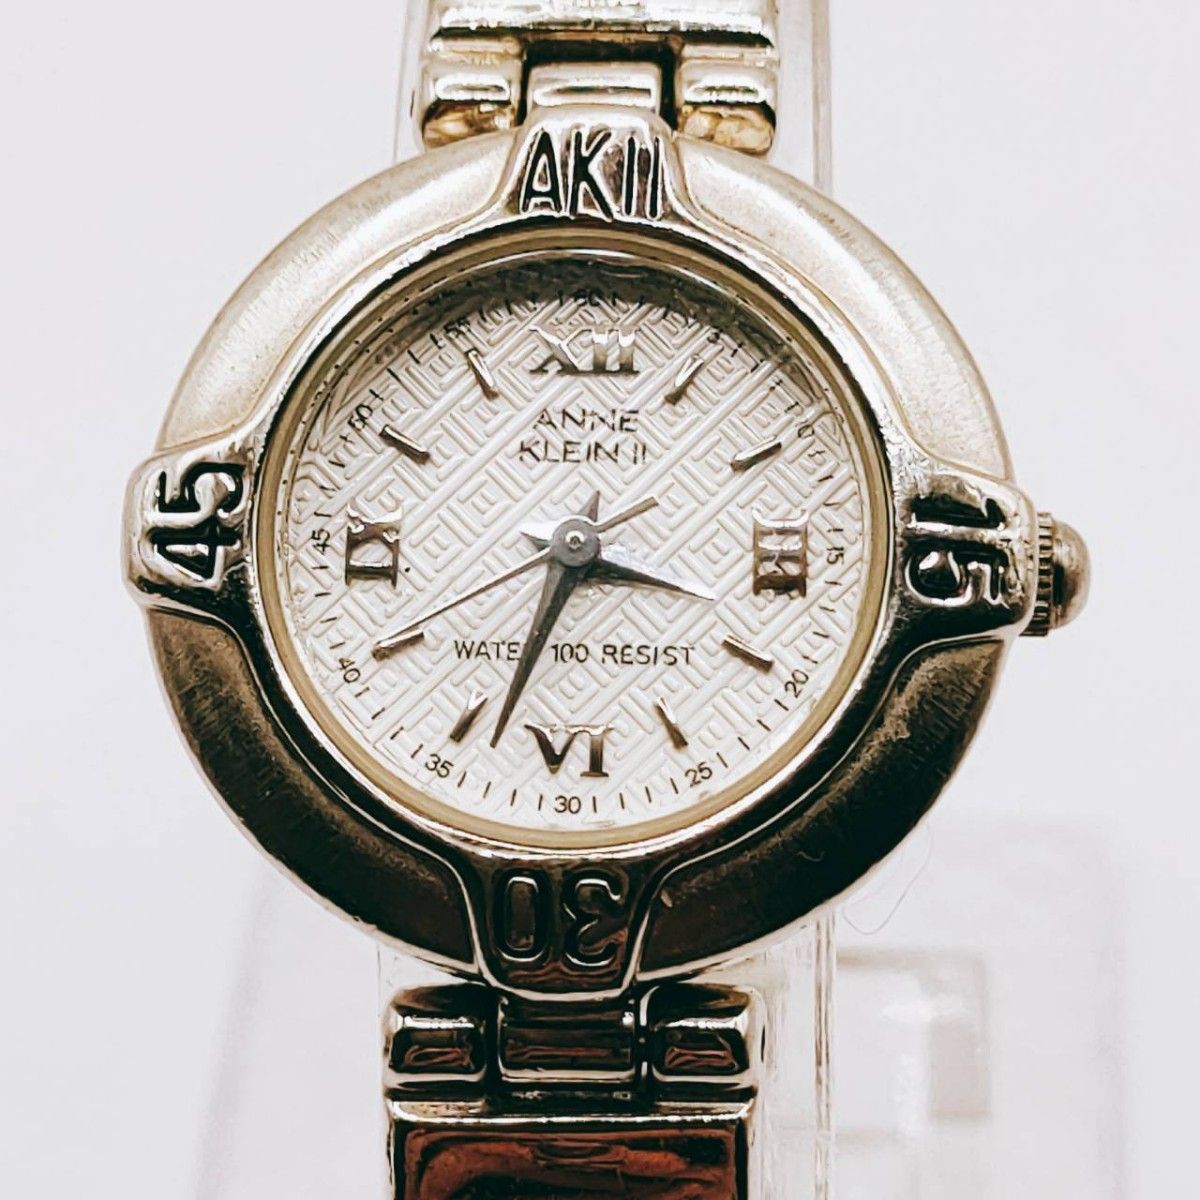 #20 ANNE KLEIN 2 アンクライン 腕時計 アナログ 3針 白文字盤 シルバー基調 時計 とけい トケイ アクセサリー